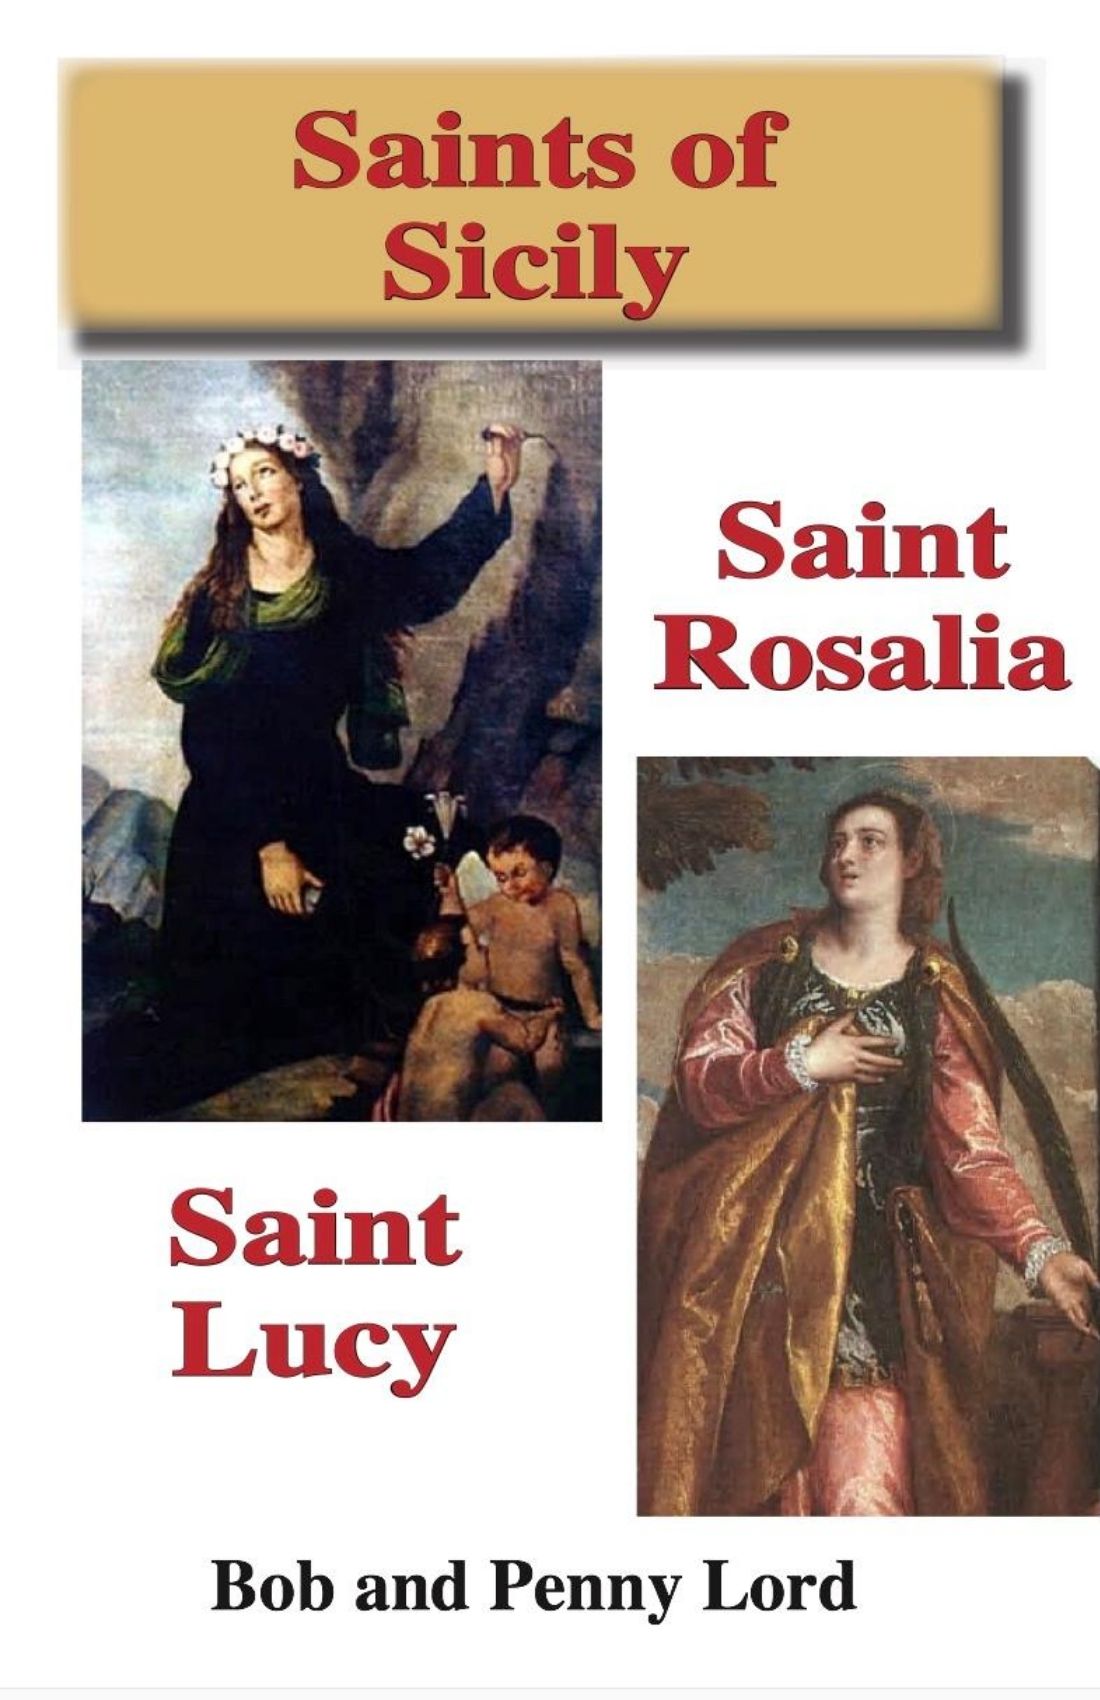 Saints of Sicily Saint Rosalia Saint Lucy Minibook - Bob and Penny Lord